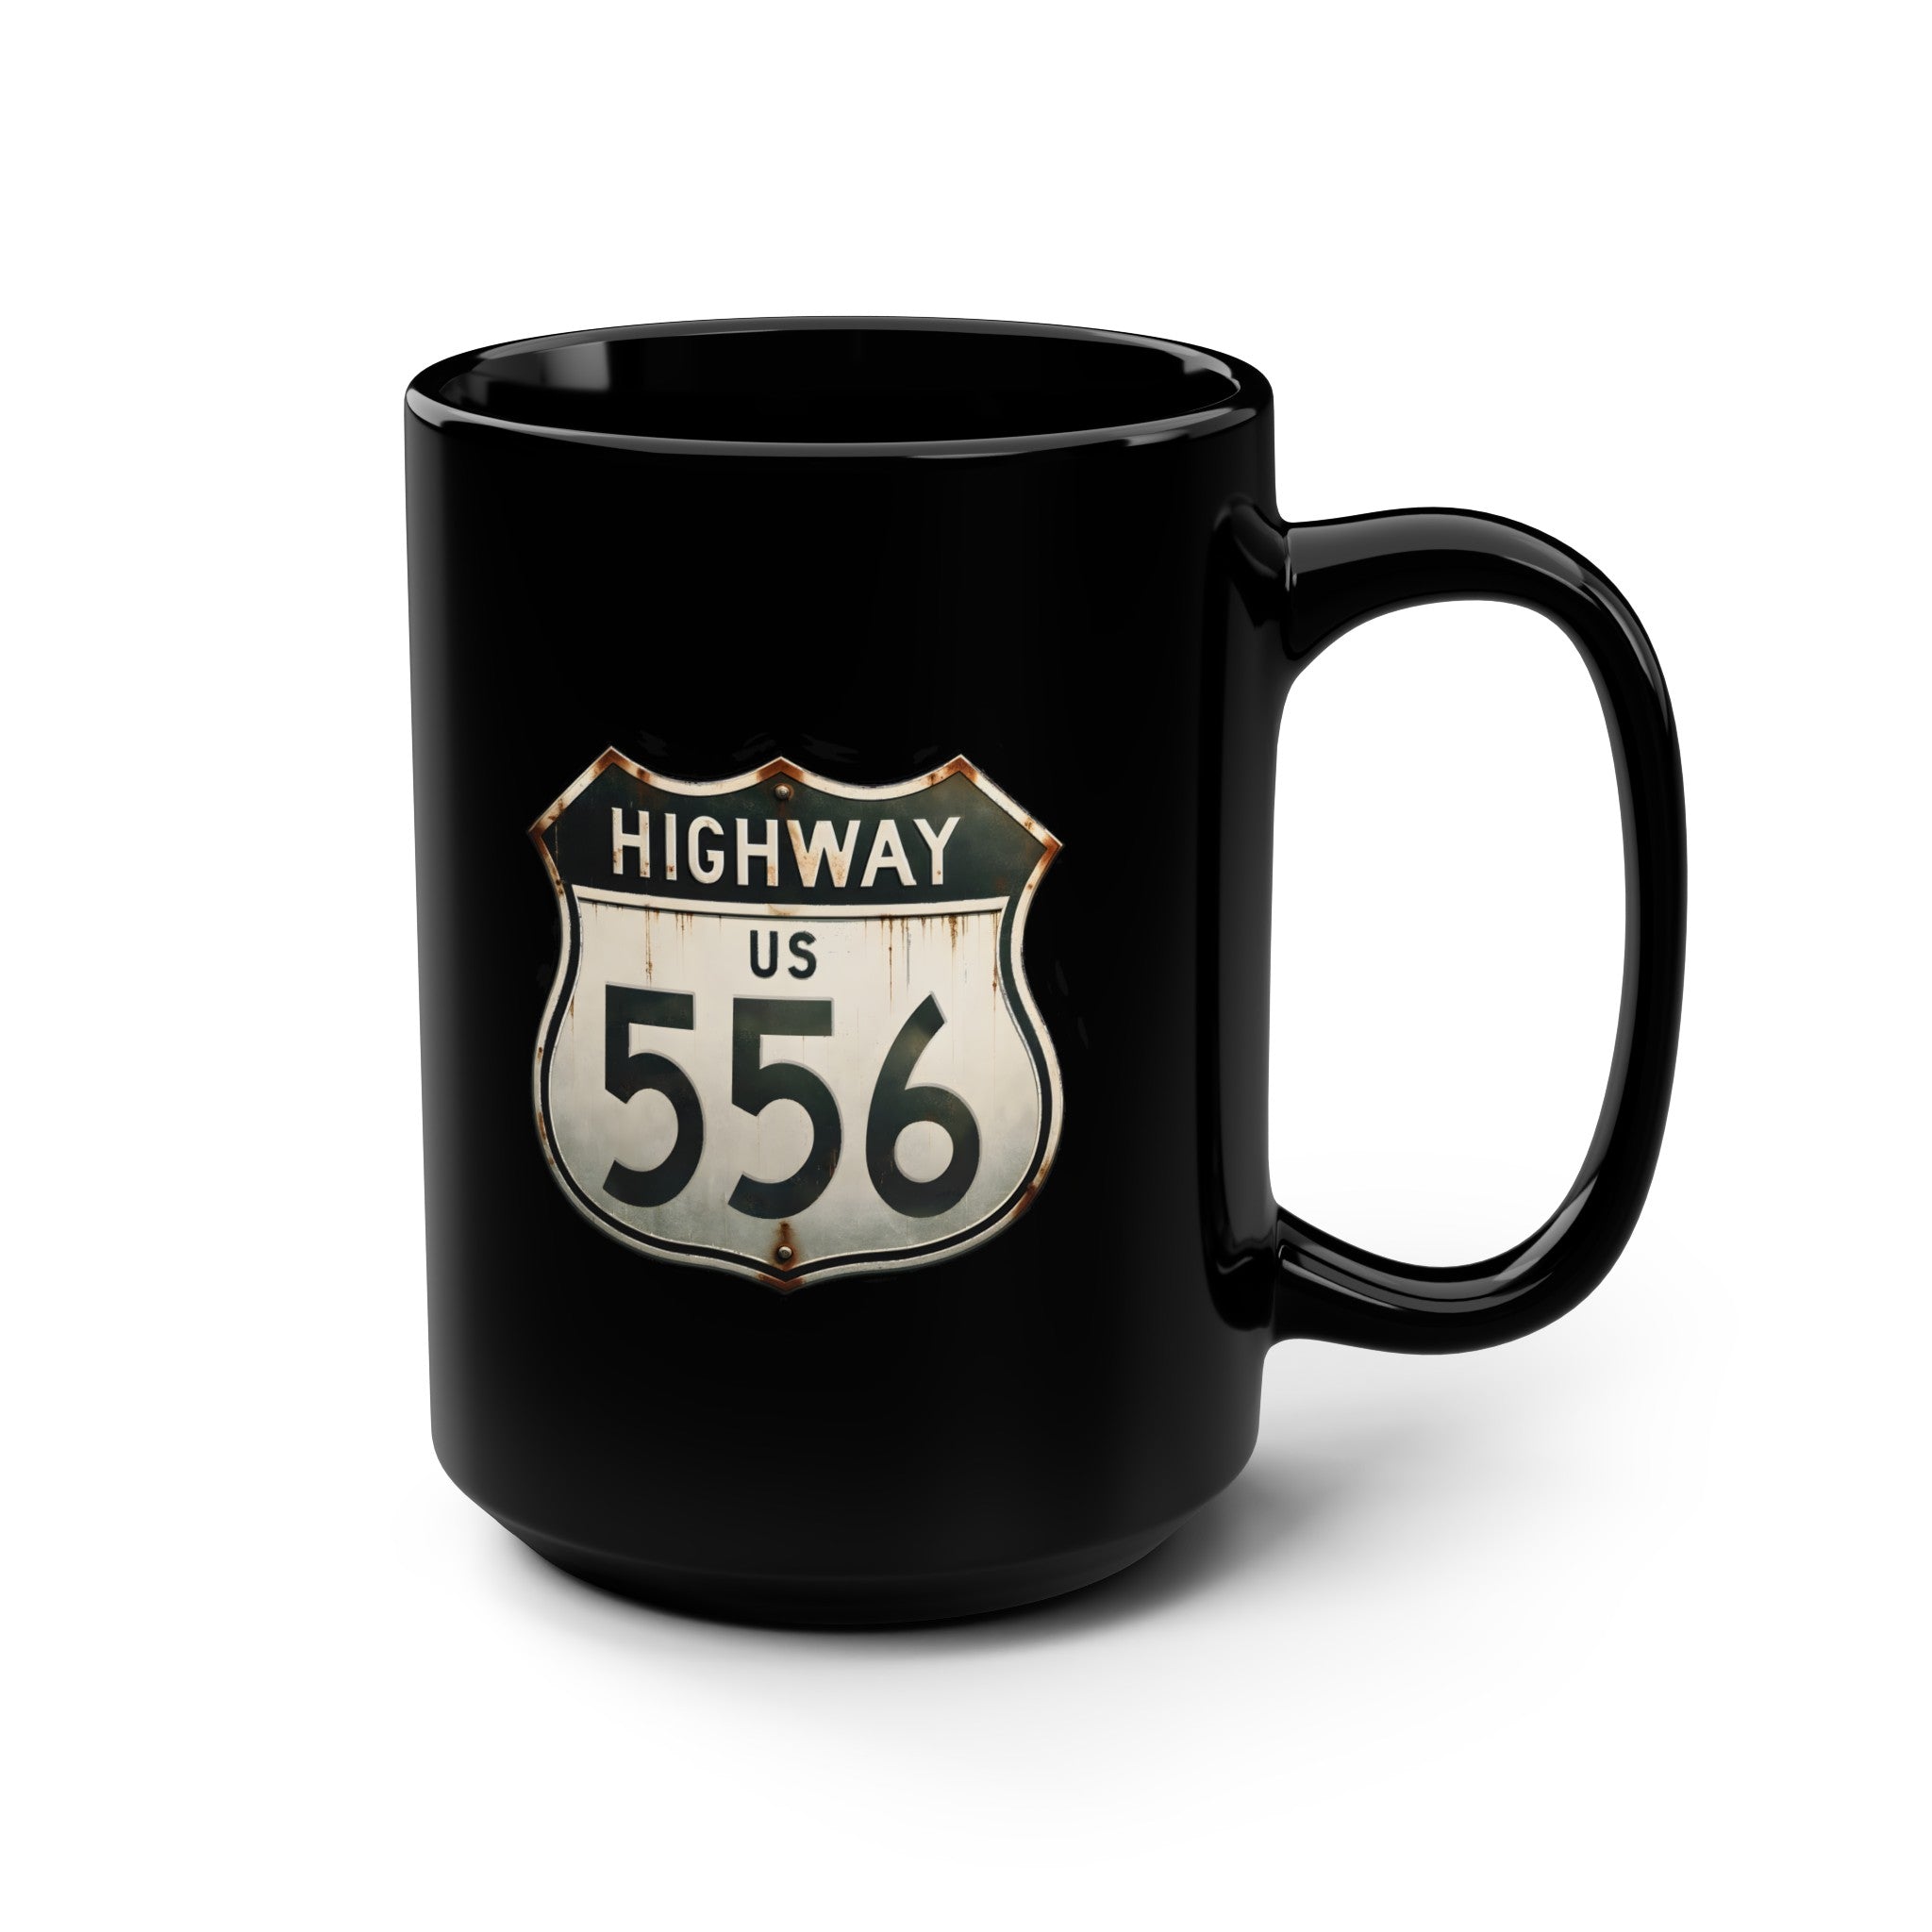 Highway 556 Black Mug, 15oz